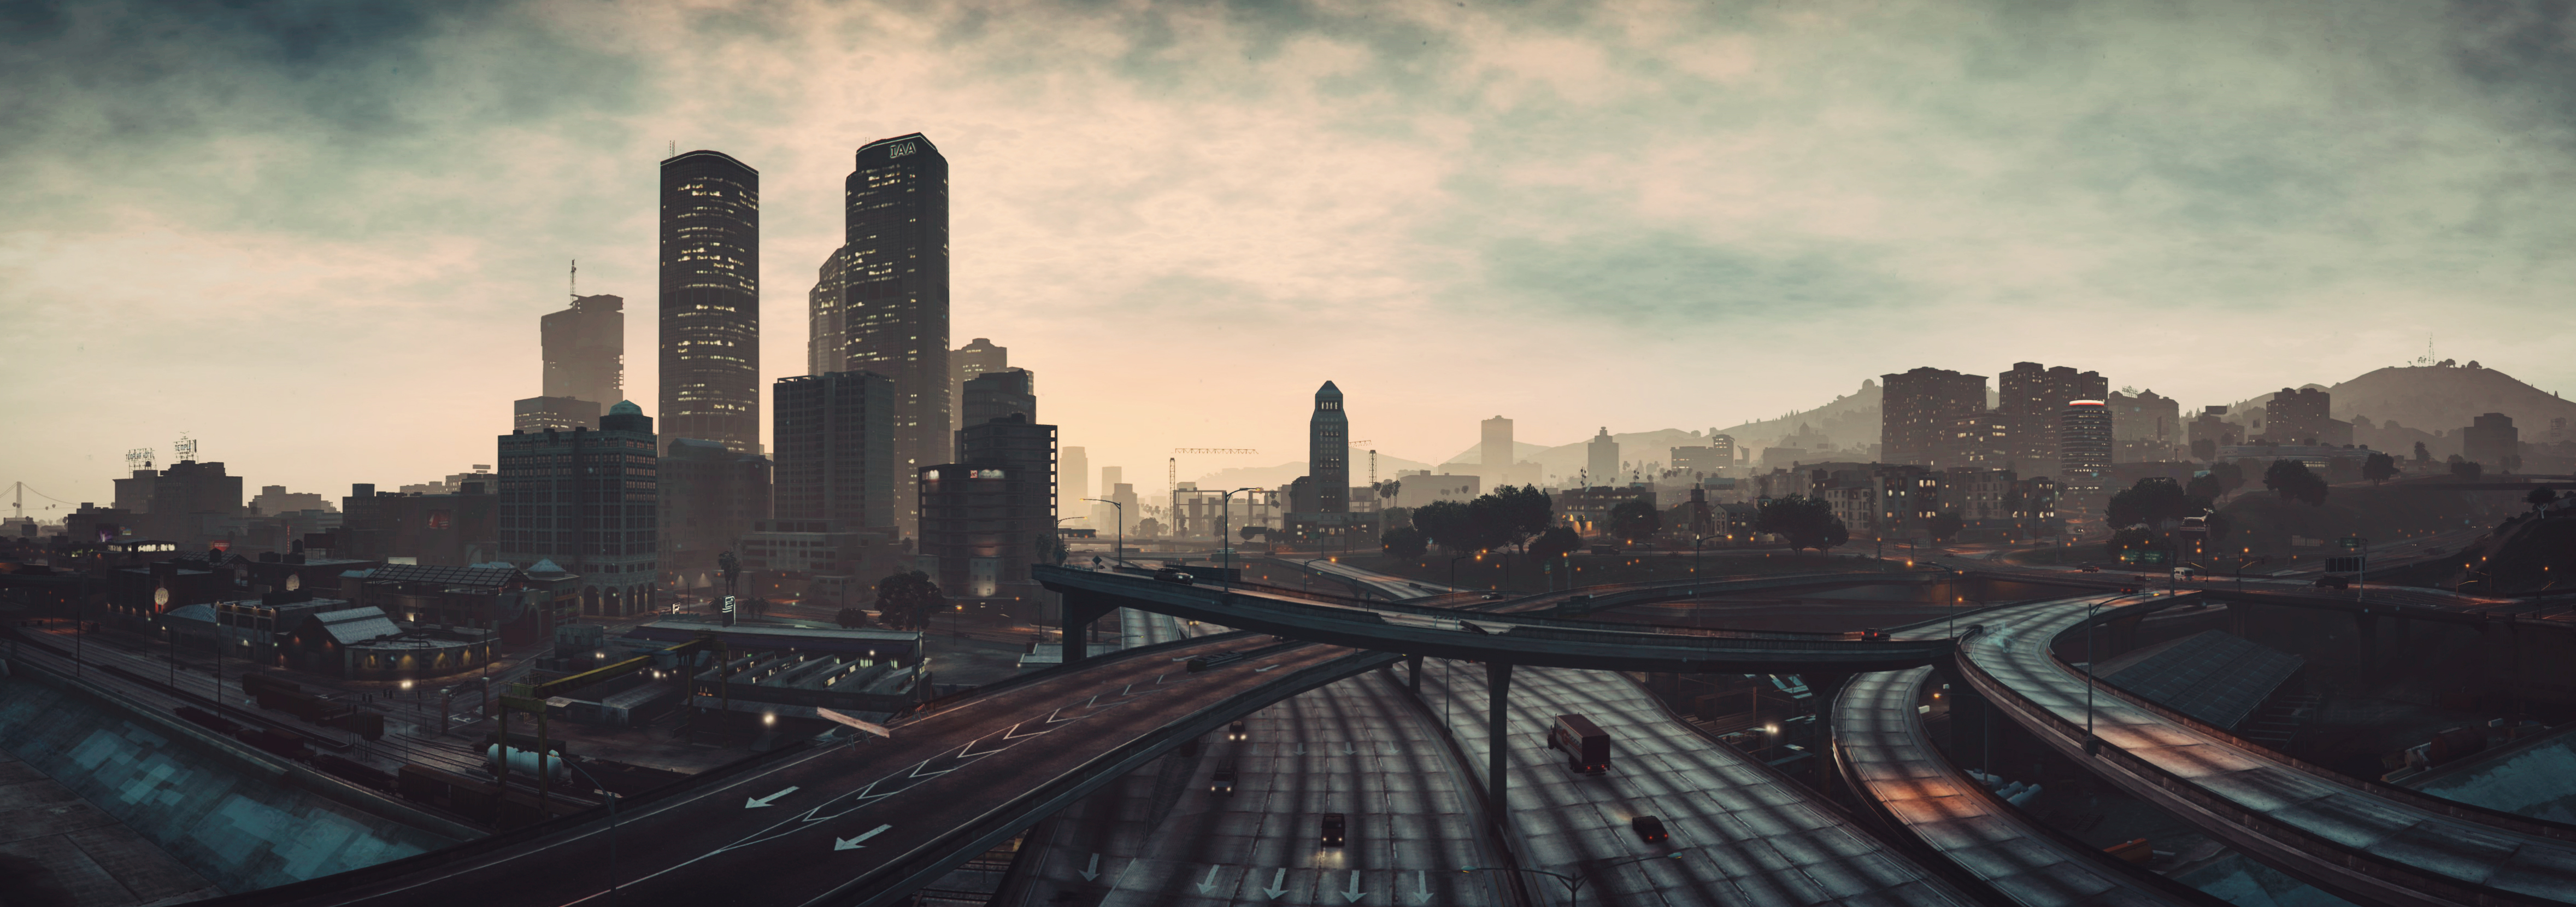 City Grand Theft Auto V Los Santos Road Sky Skyscraper 4714x1659